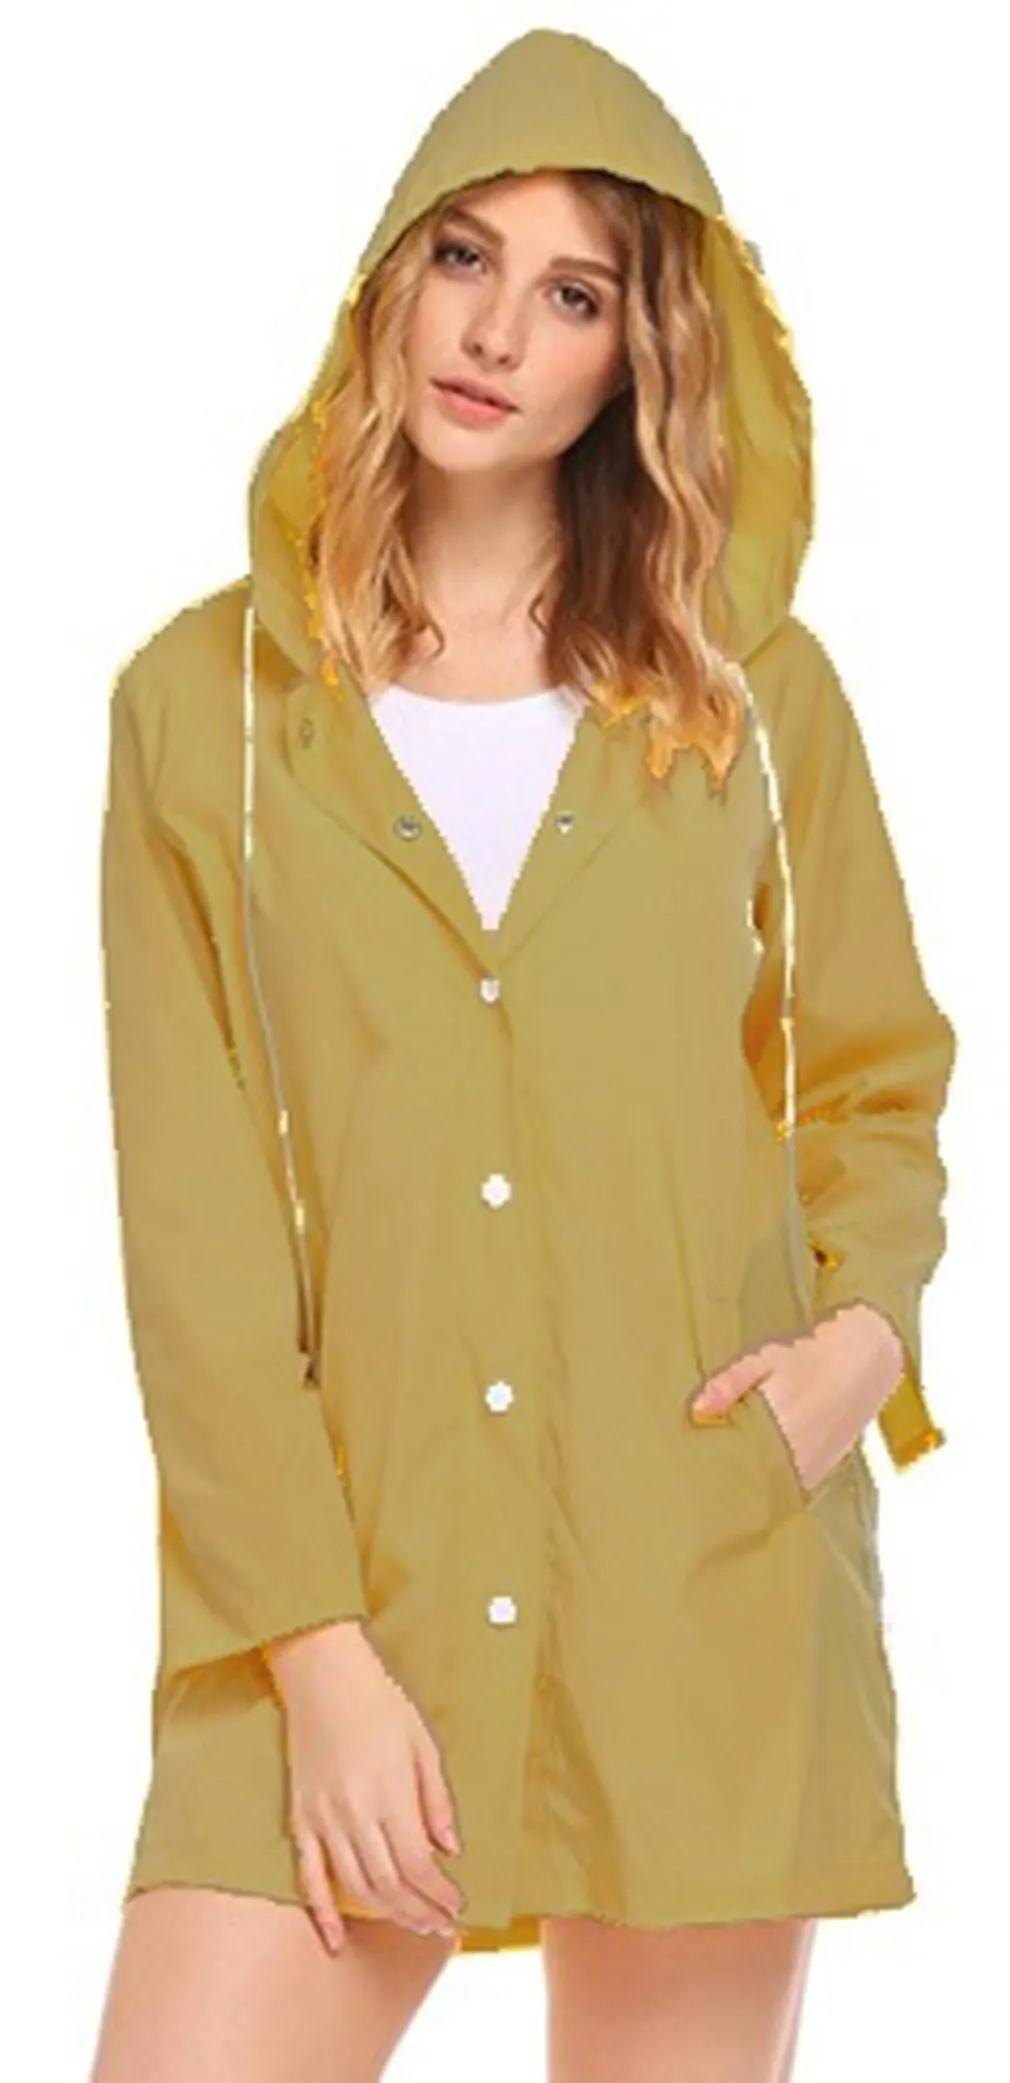 Lightweight Raincoat Hooded Long Sleeve Above Knee Windbreaker Waterproof Active Outdoor Rain Jacket for All Season